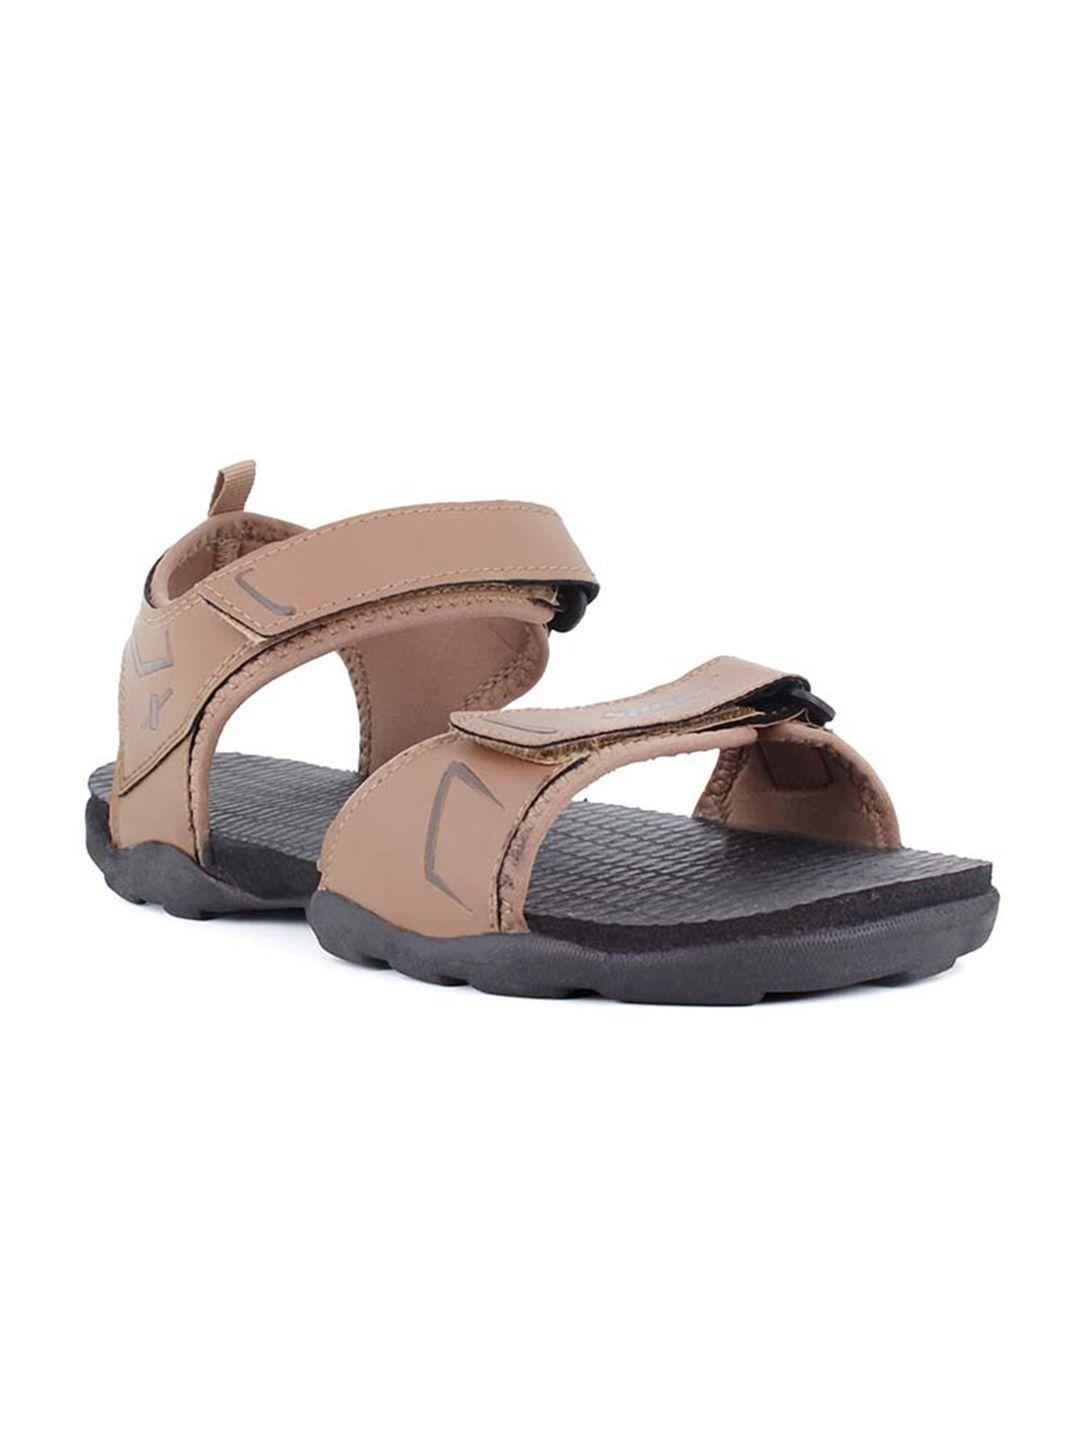 sparx-men-camel-brown-sports-sandals